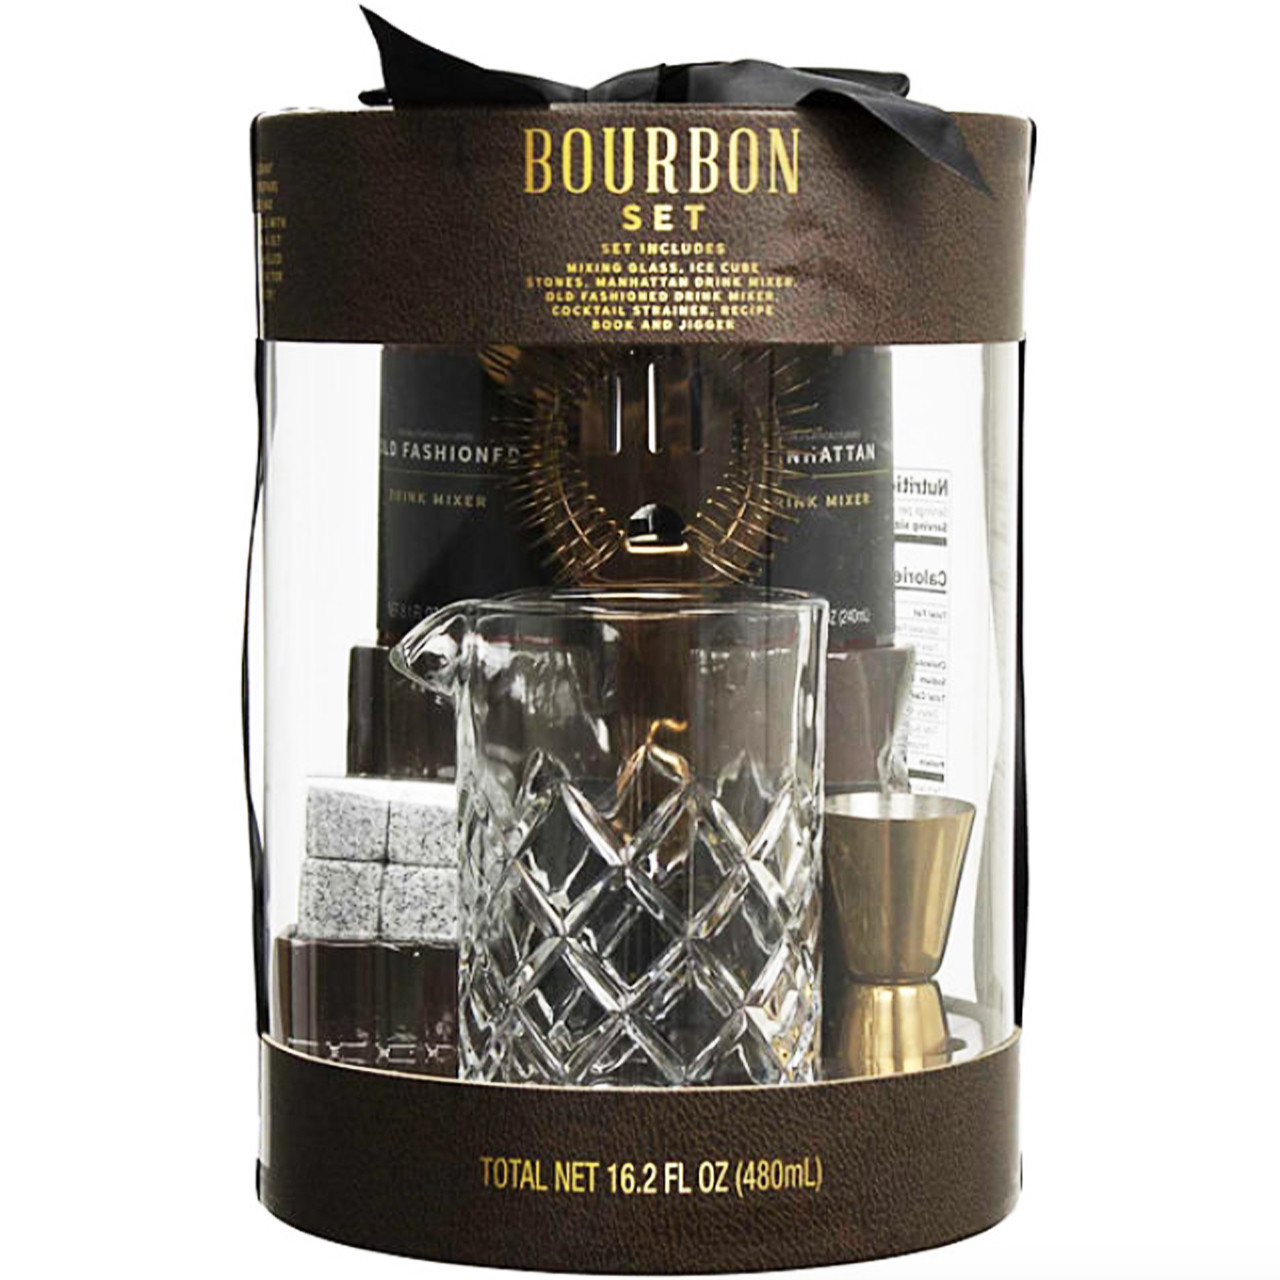 The Modern Gourmet Mini Bar Bourbon Gift Set